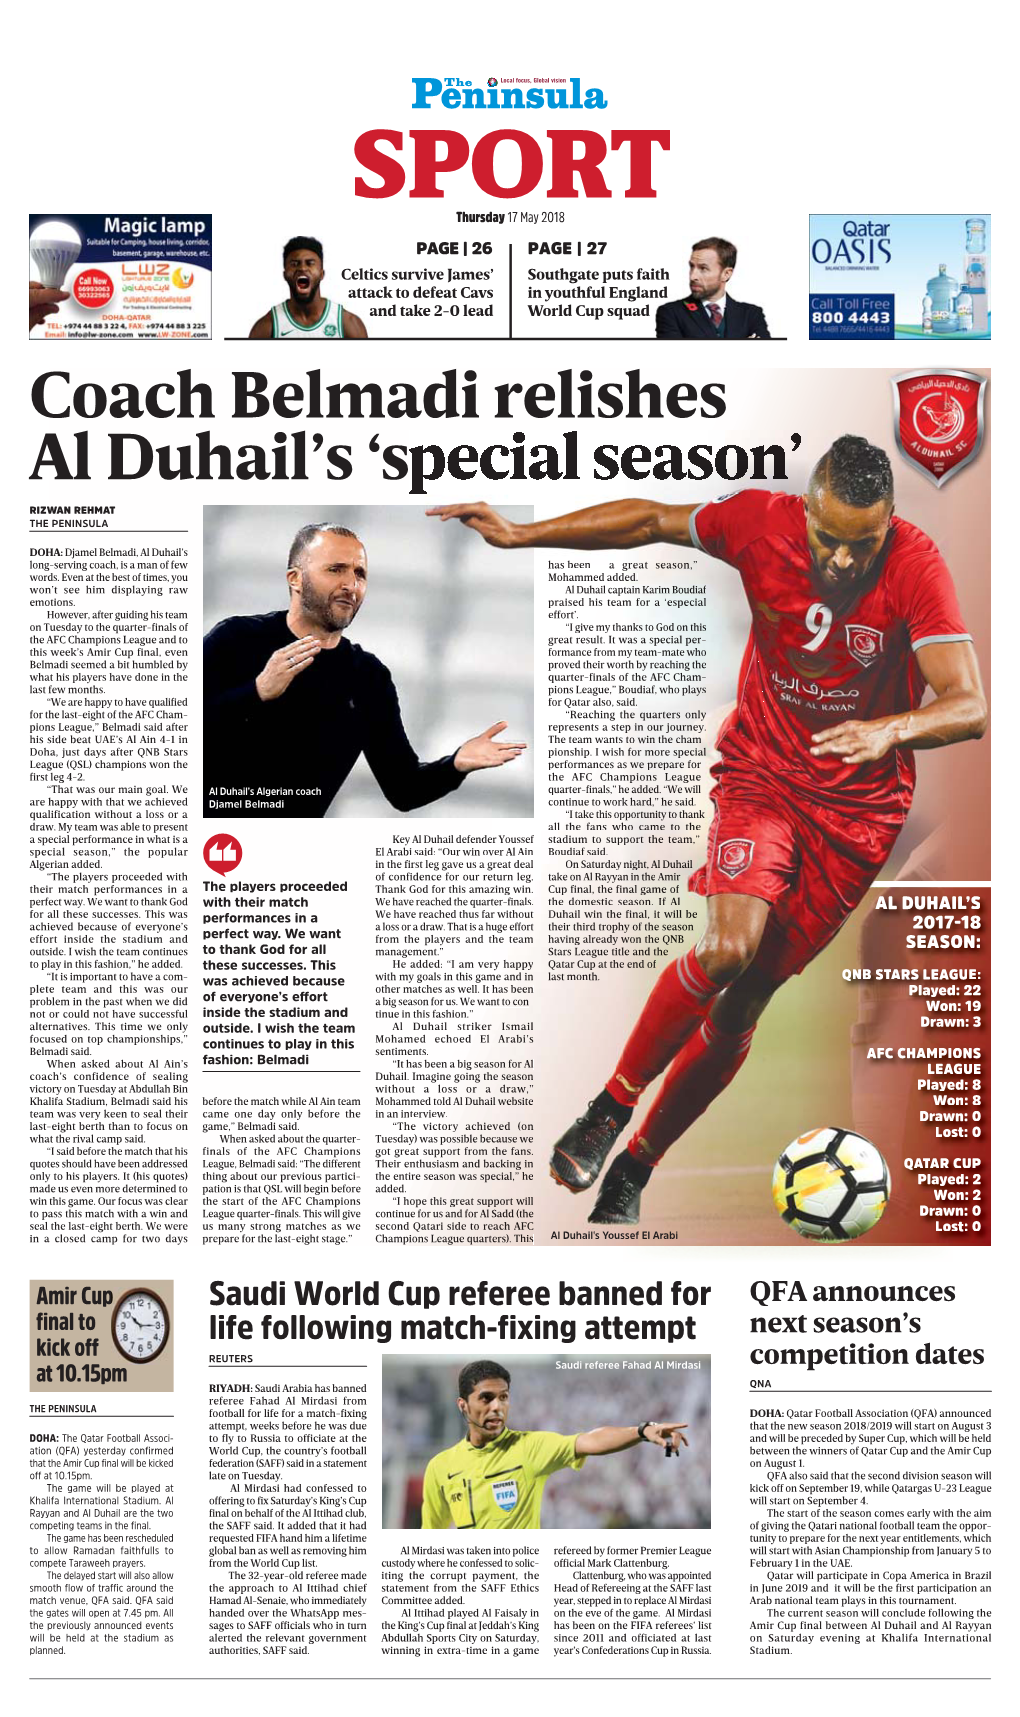 Coach Belmadi Relishes Al Duhail's